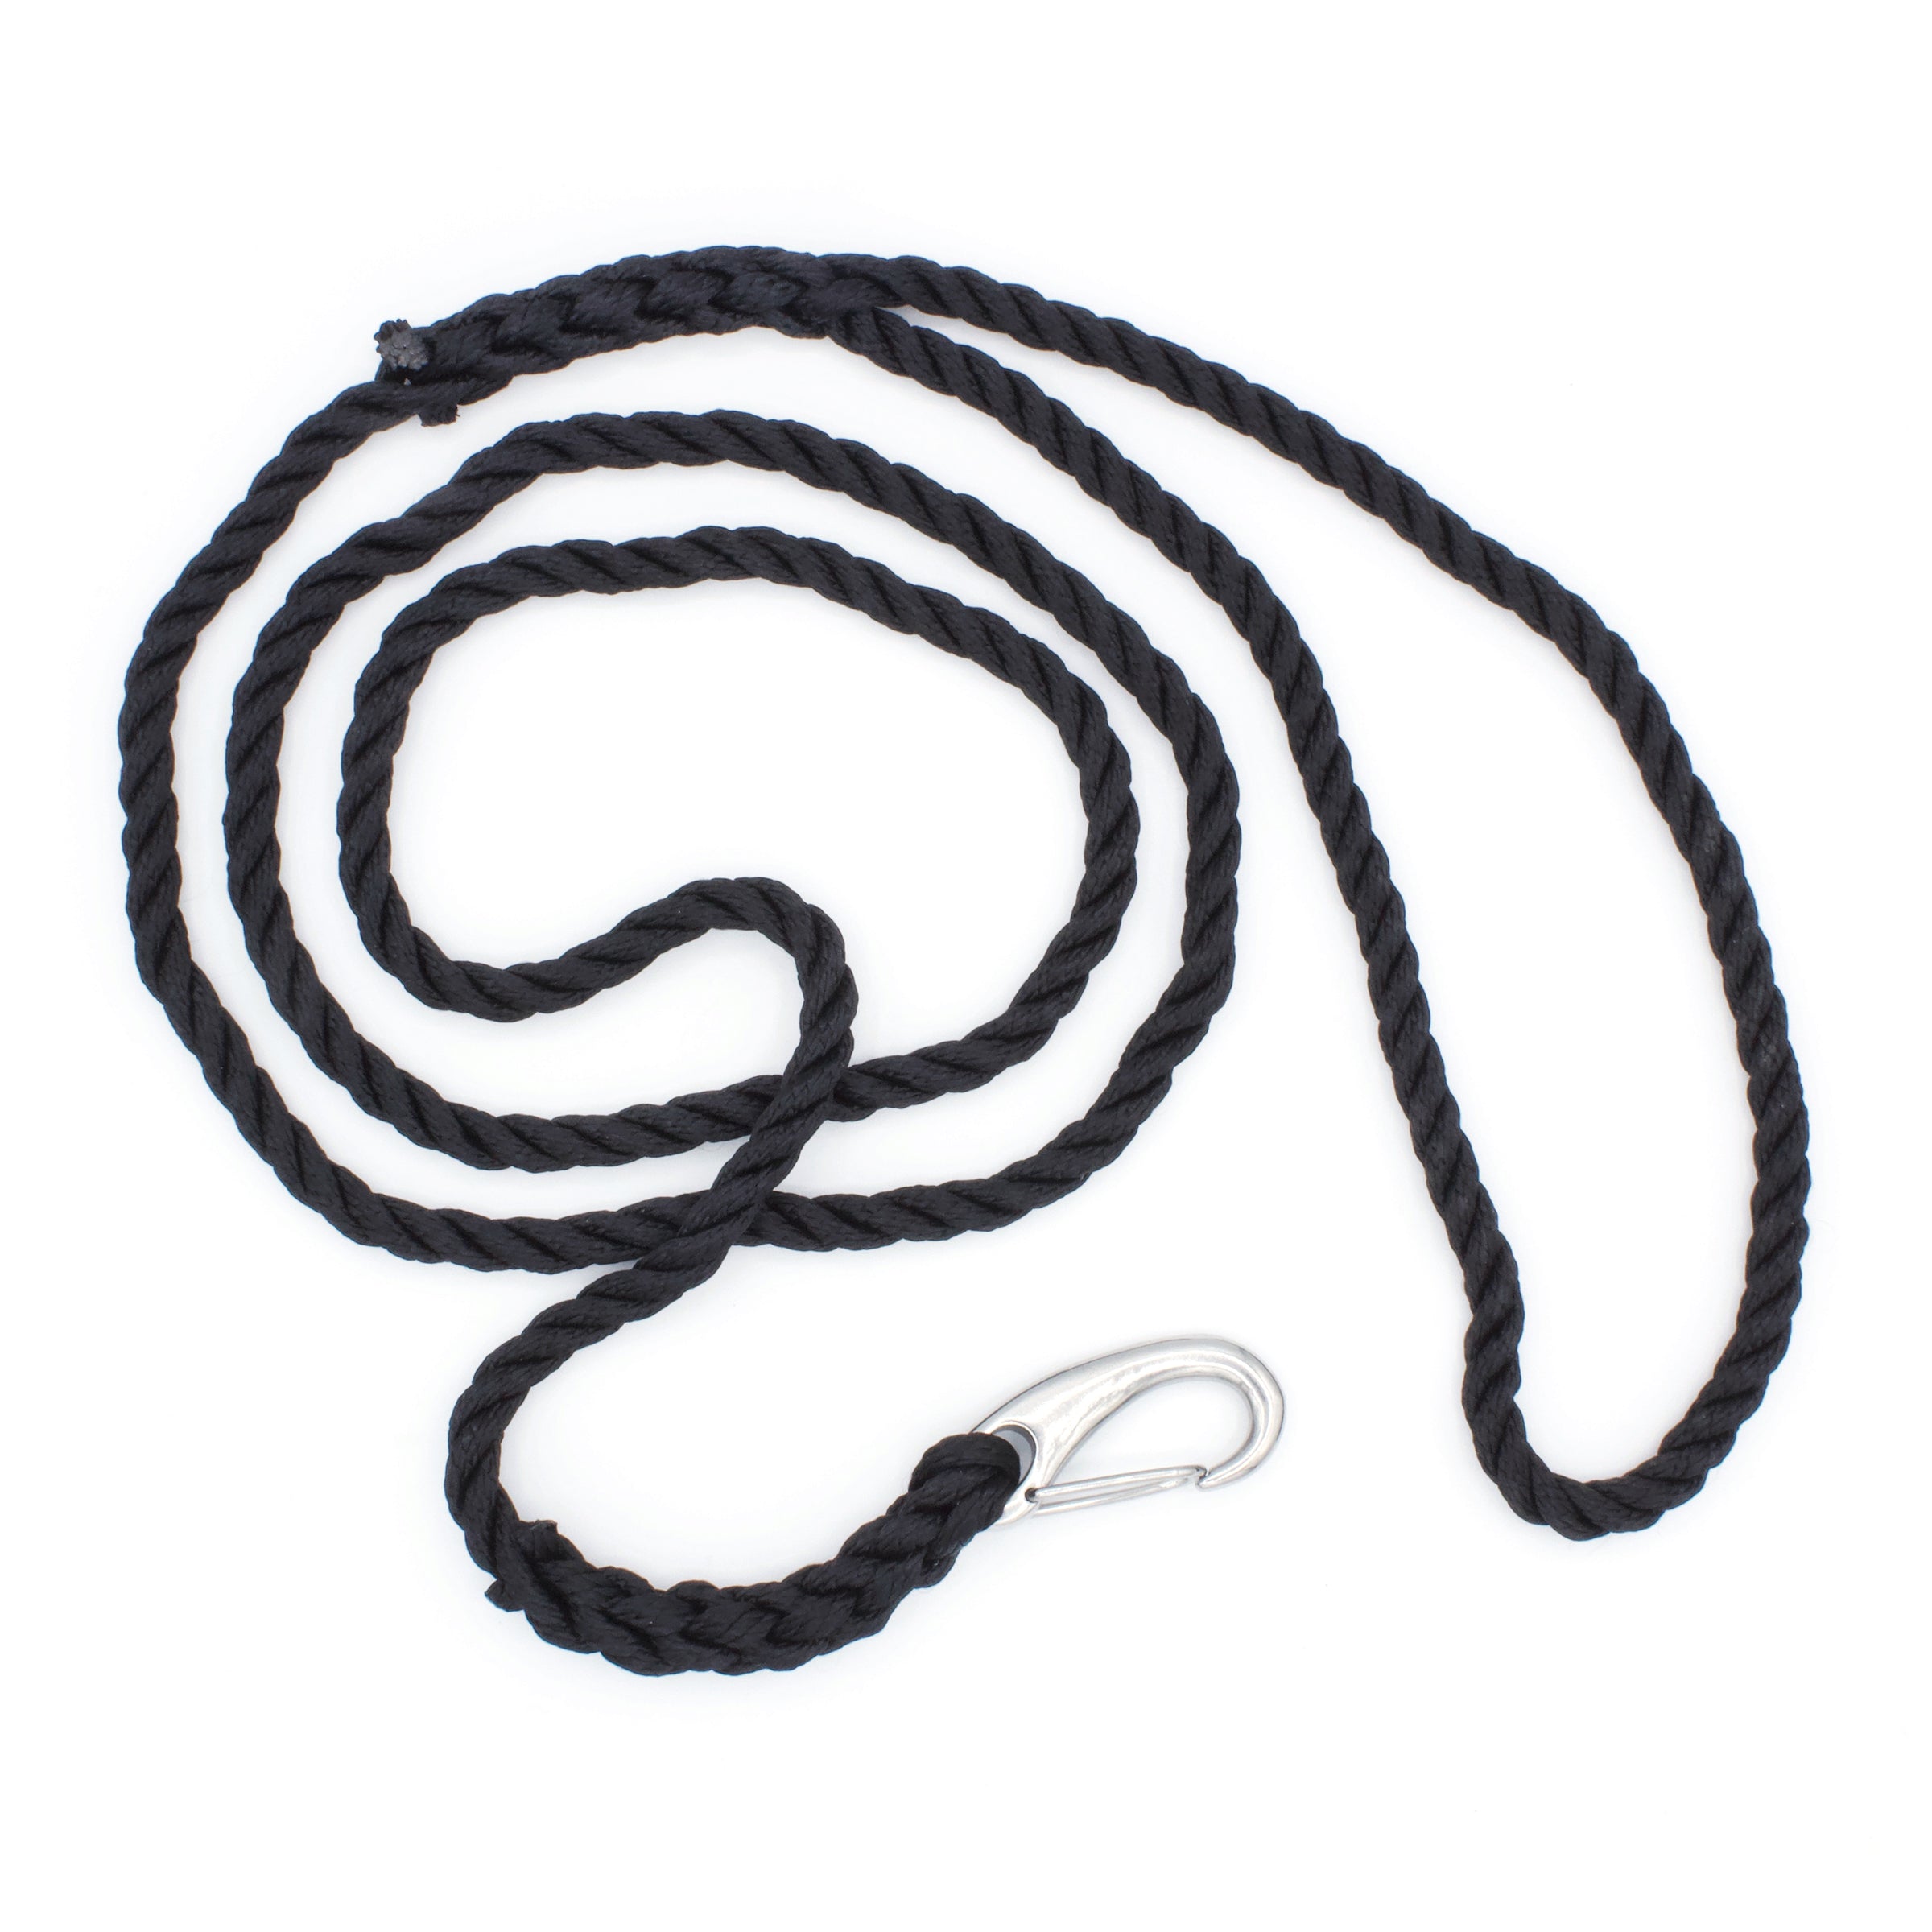 Calcutta rod leash